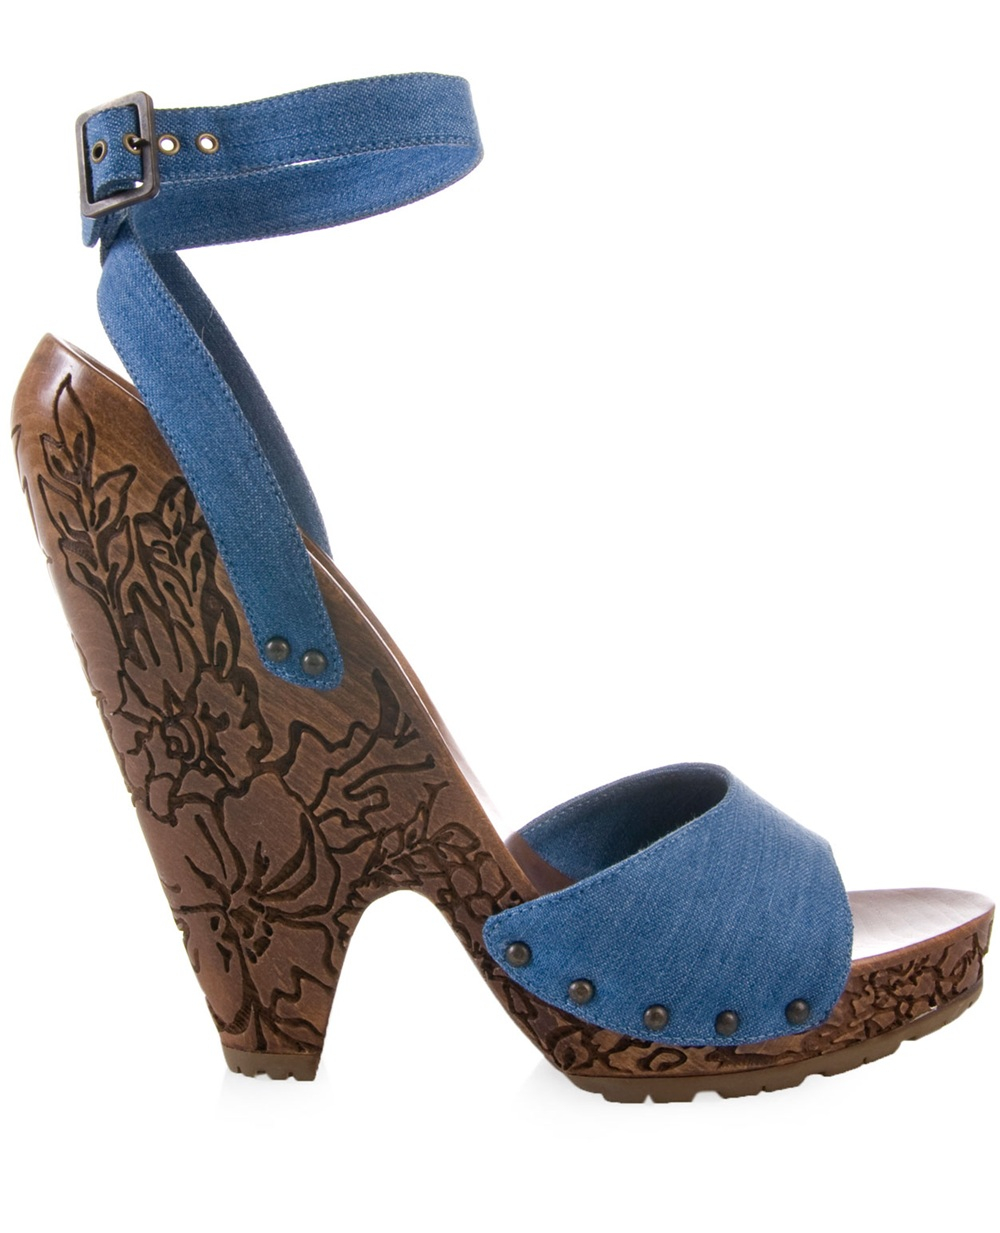 Stella McCartney Denim Sandal with Carved Wooden Heel in Blue - Lyst